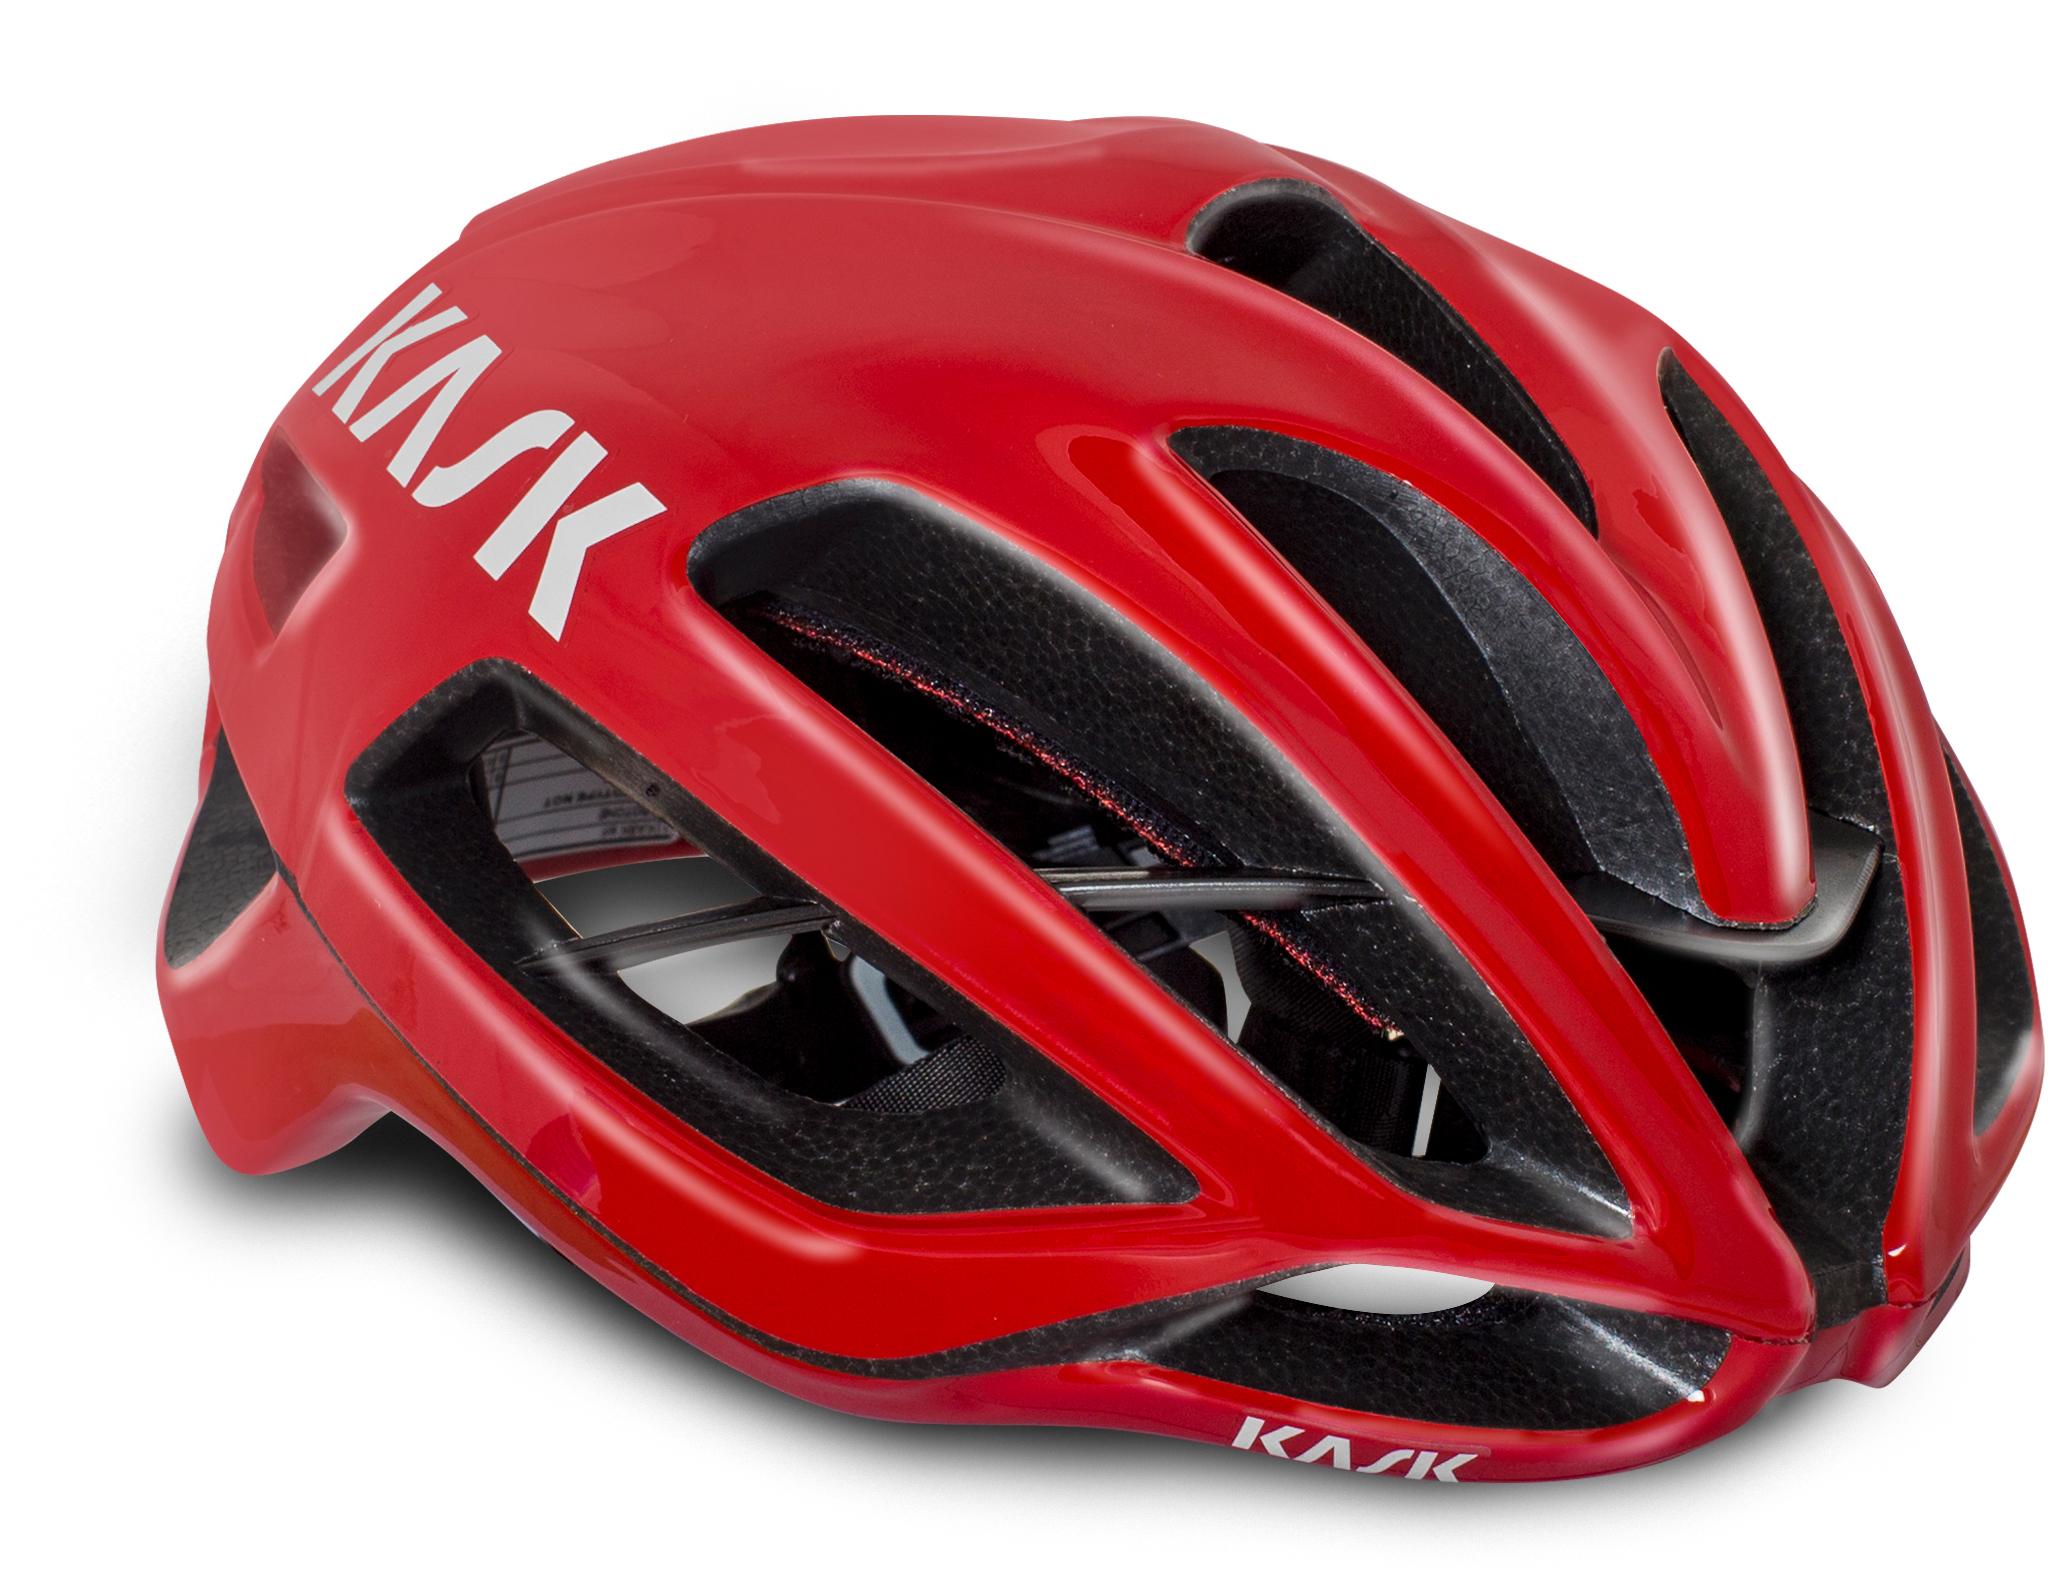 Kask Protone Wg11 Road Helmet, Red, Small